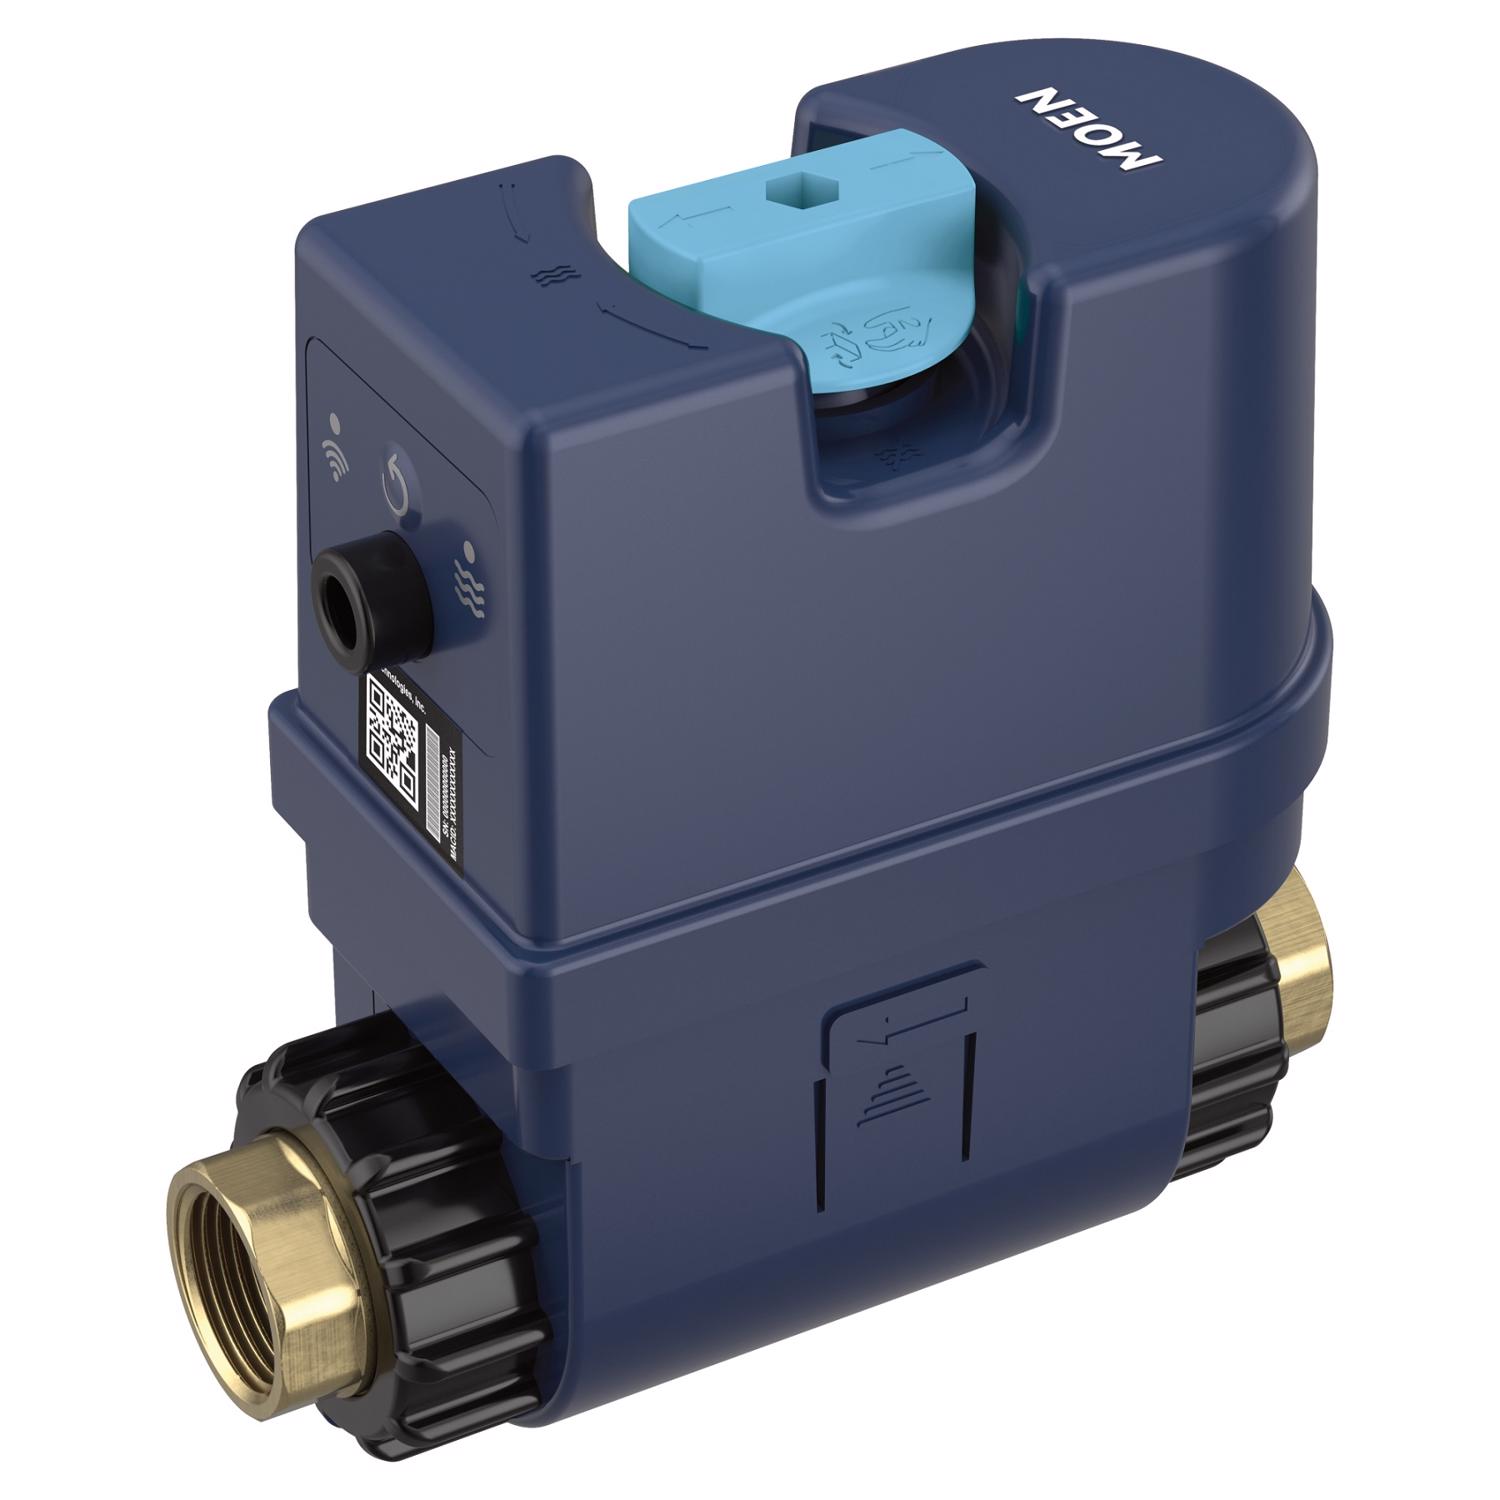 Photos - Power Tool Accessory Moen Flo Smart Water Leak Detection Alarm 900-001 